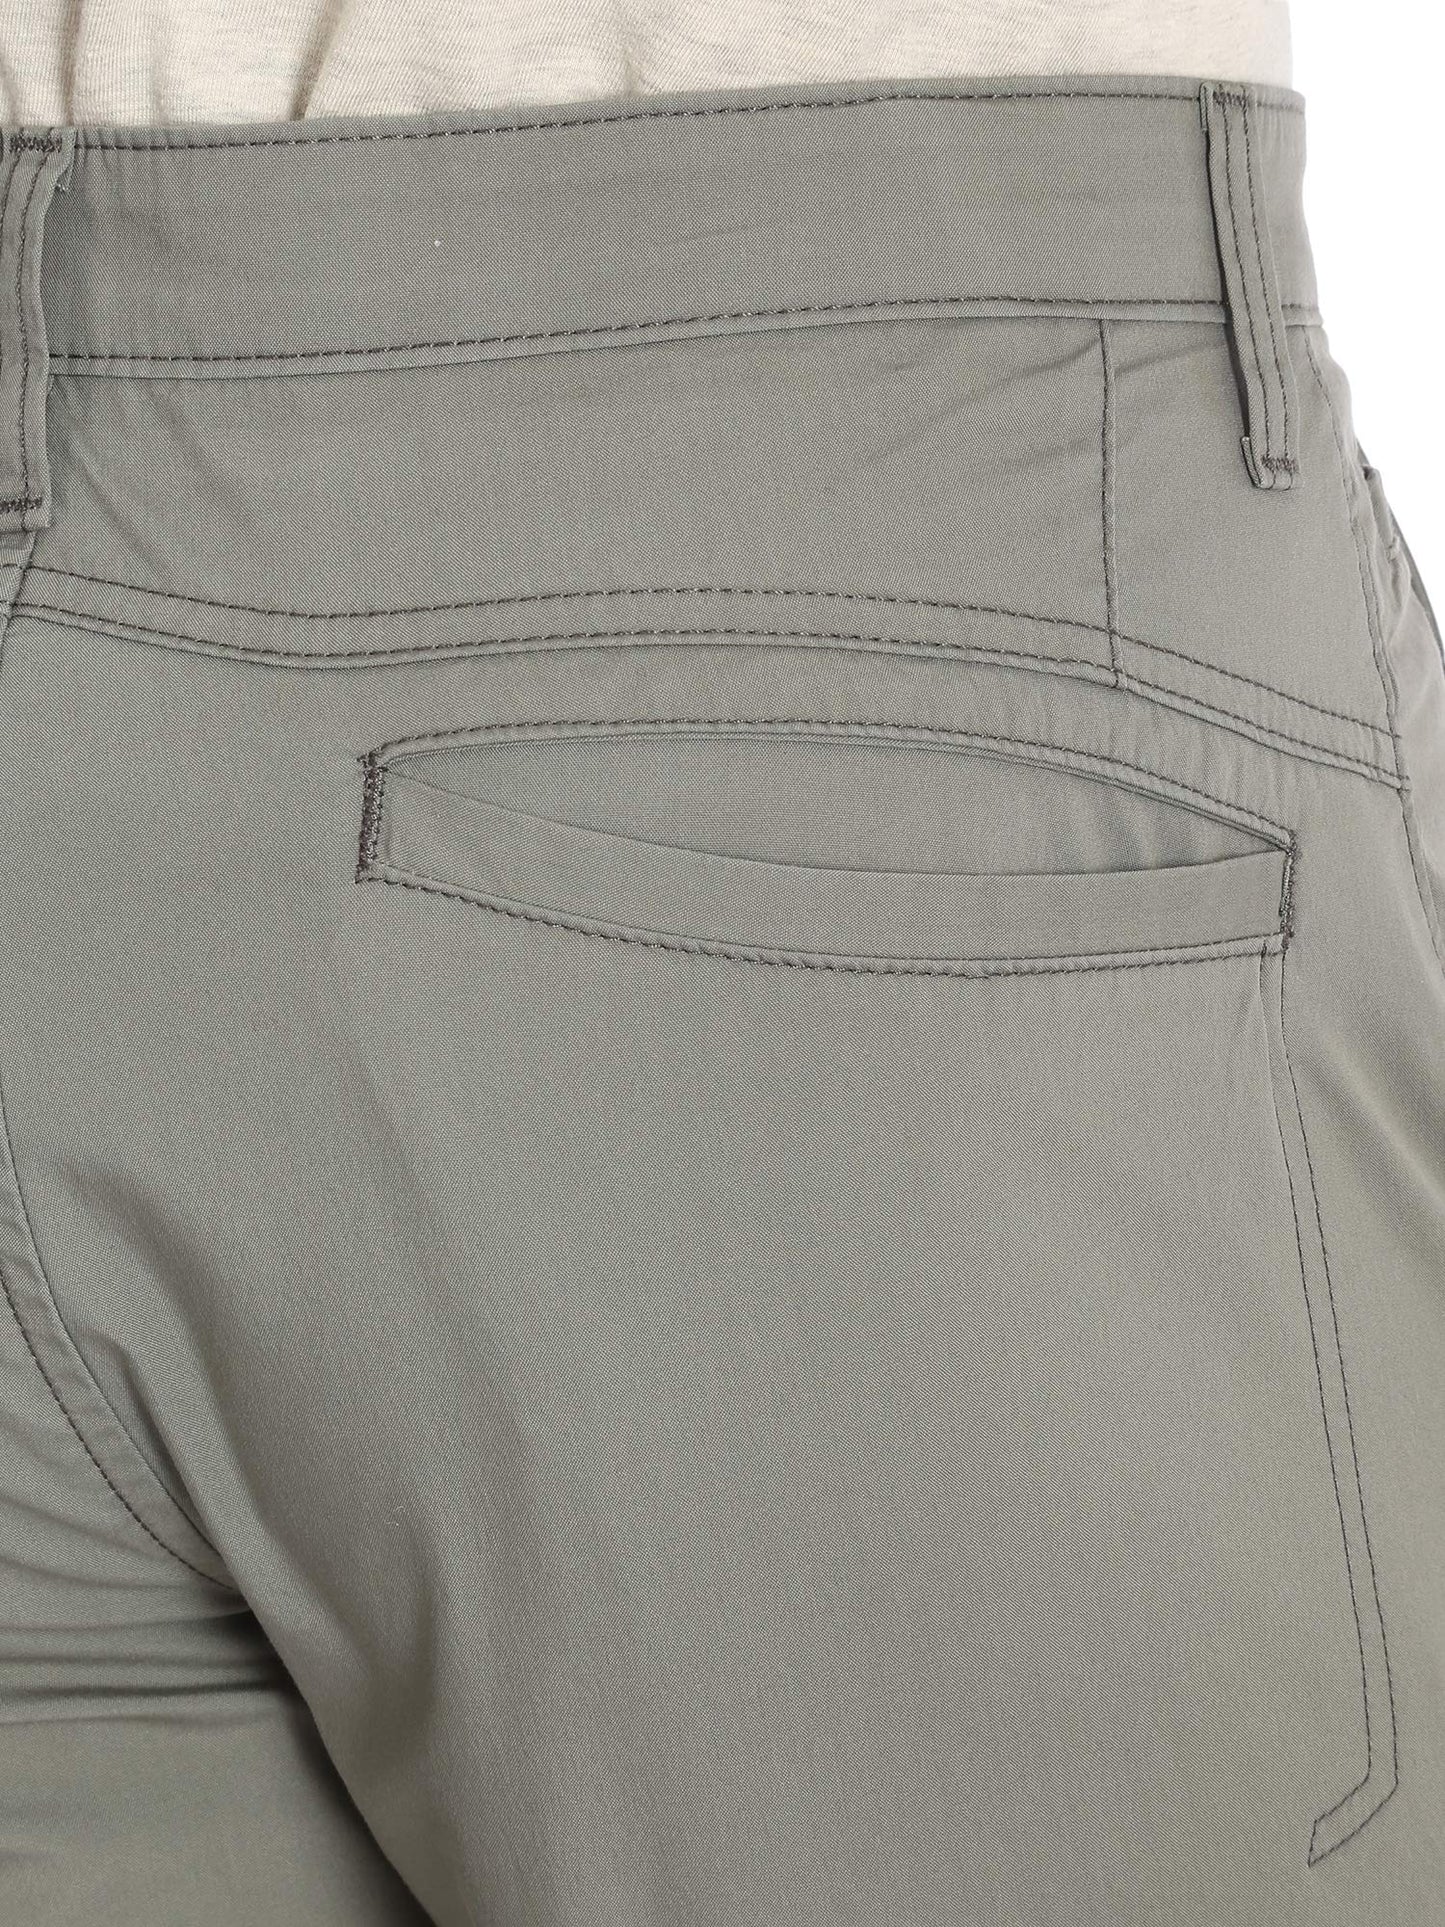 Wrangler Authentics Men's Performance Comfort Flex Flat Front Short, Army Green, 34